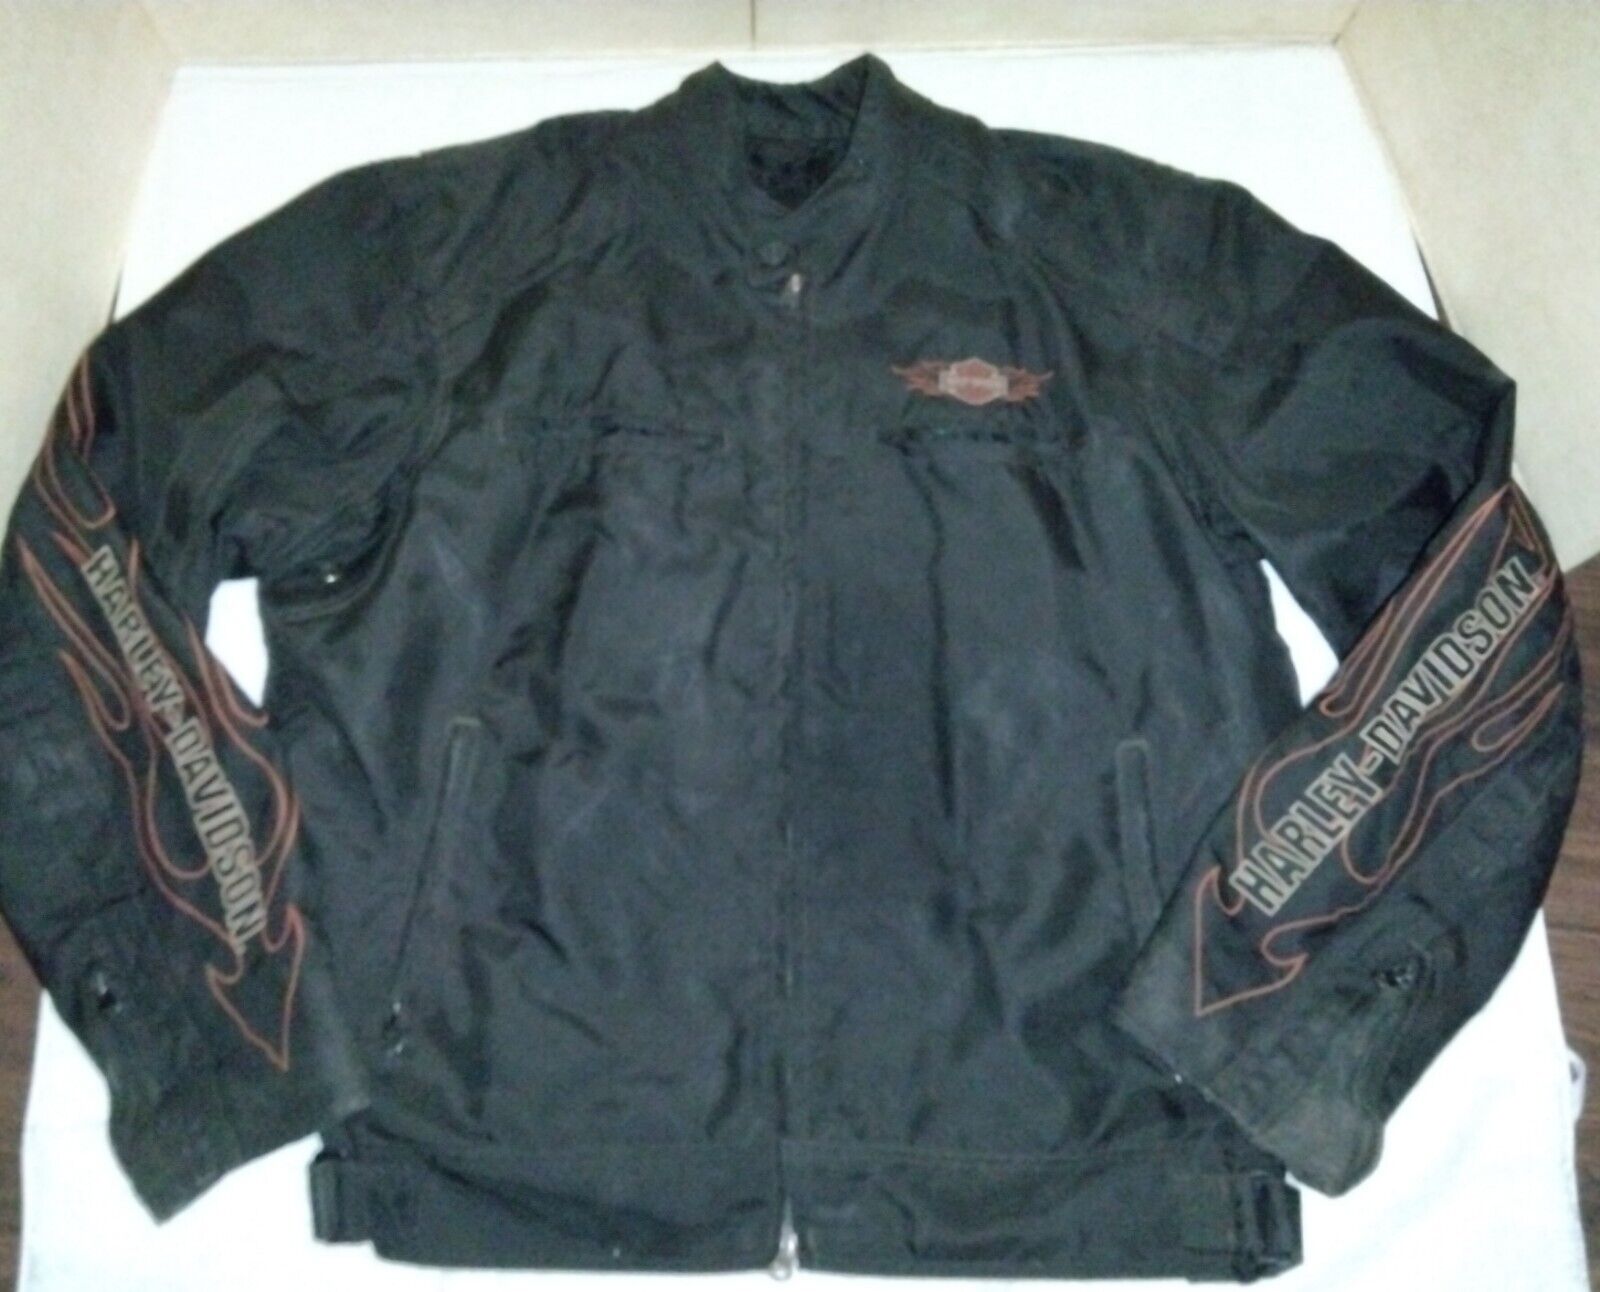 Harley Davidson Ride Ready Textile Jacket Mens Large Flames Graphic Black